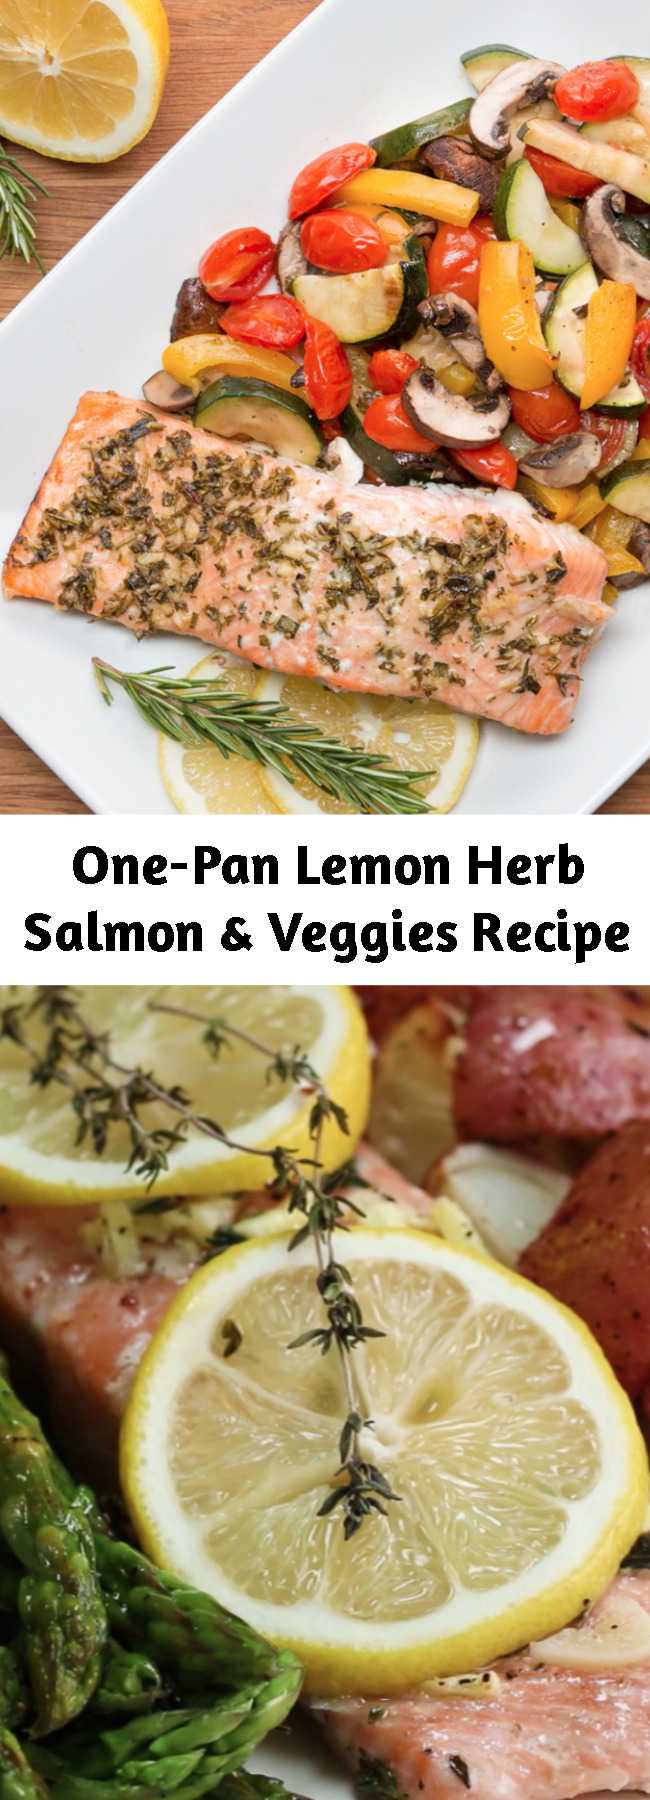 One-Pan Lemon Herb Salmon & Veggies Recipe